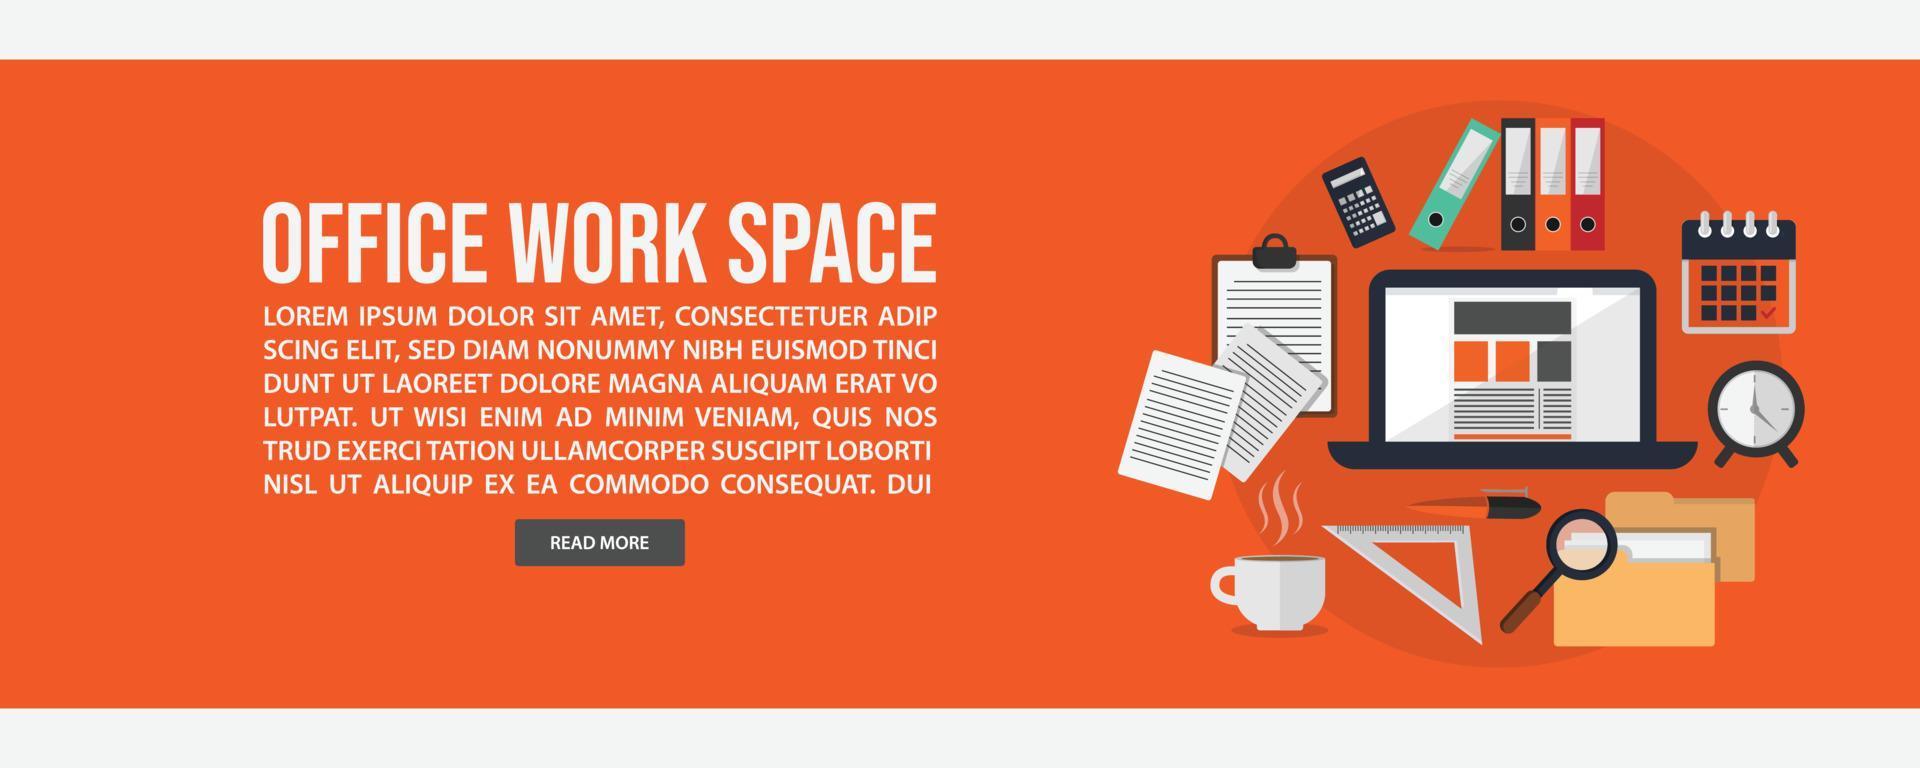 Work space web banner template design vector